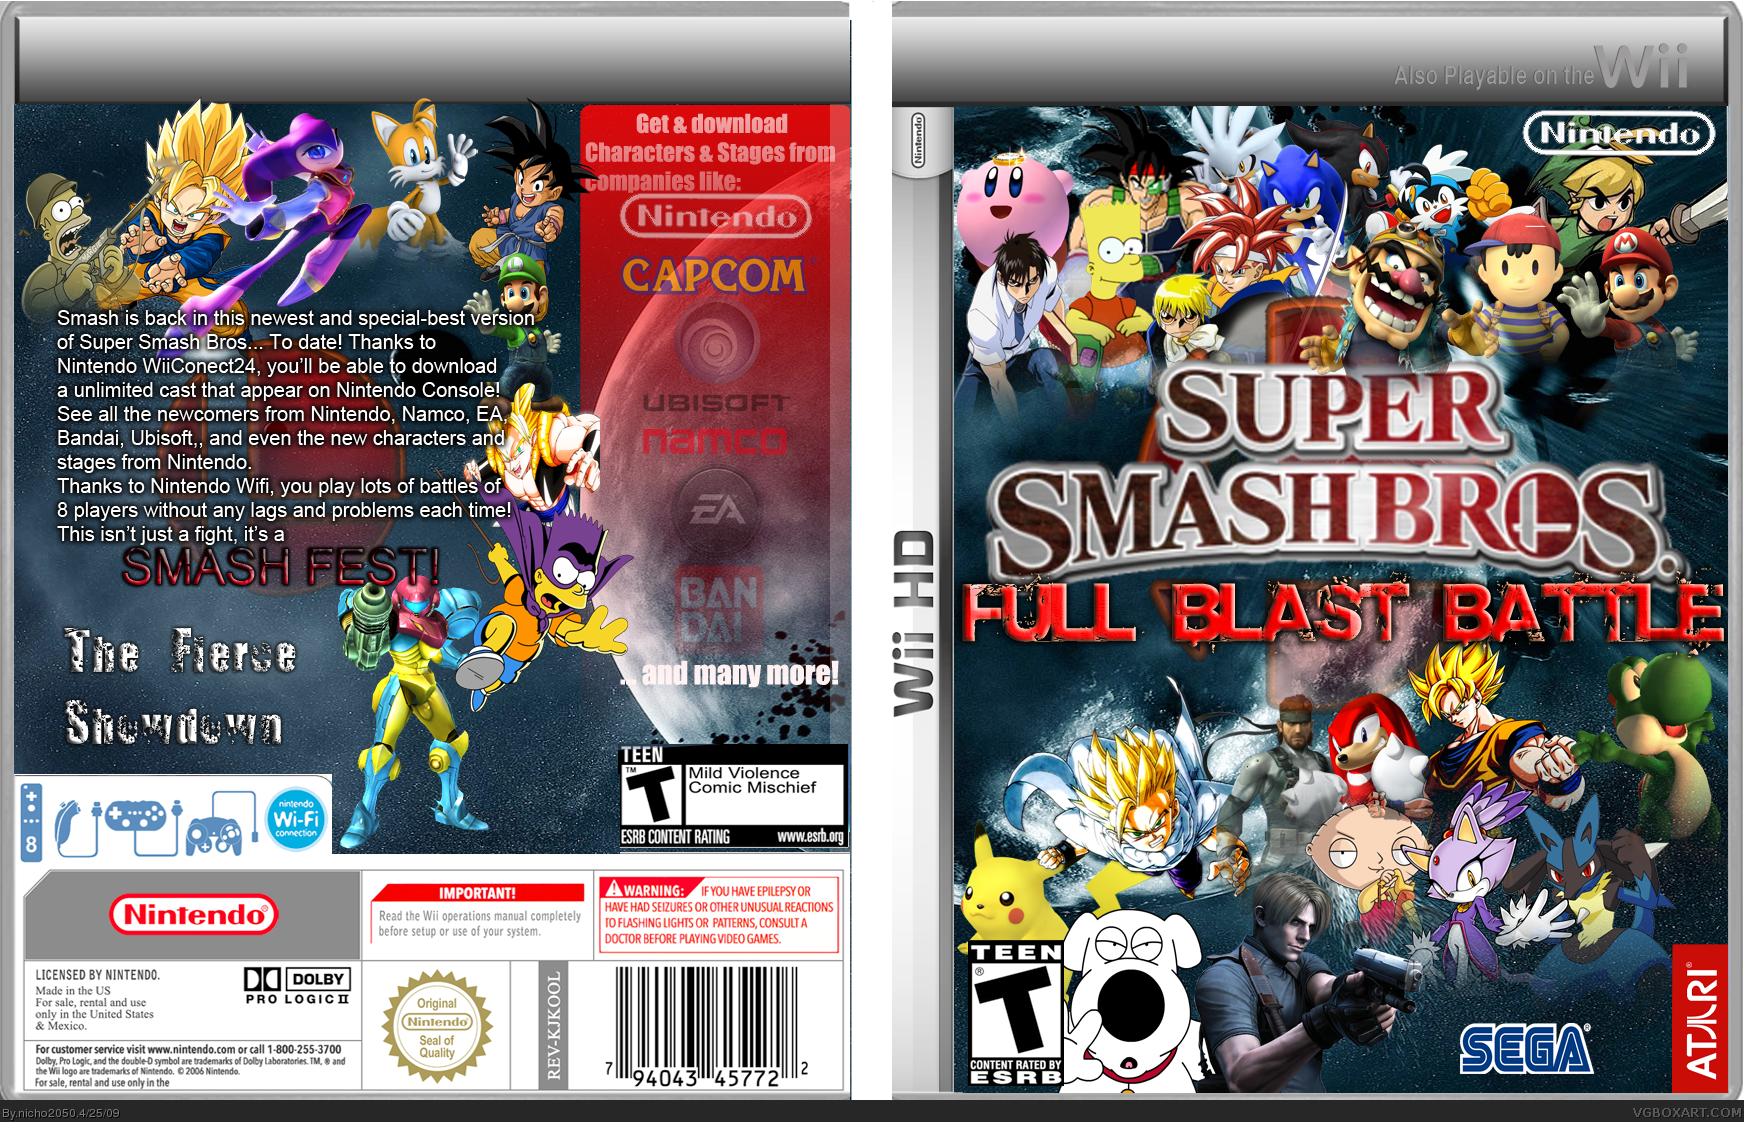 Super Smash Bros: Full Blast Battle box cover